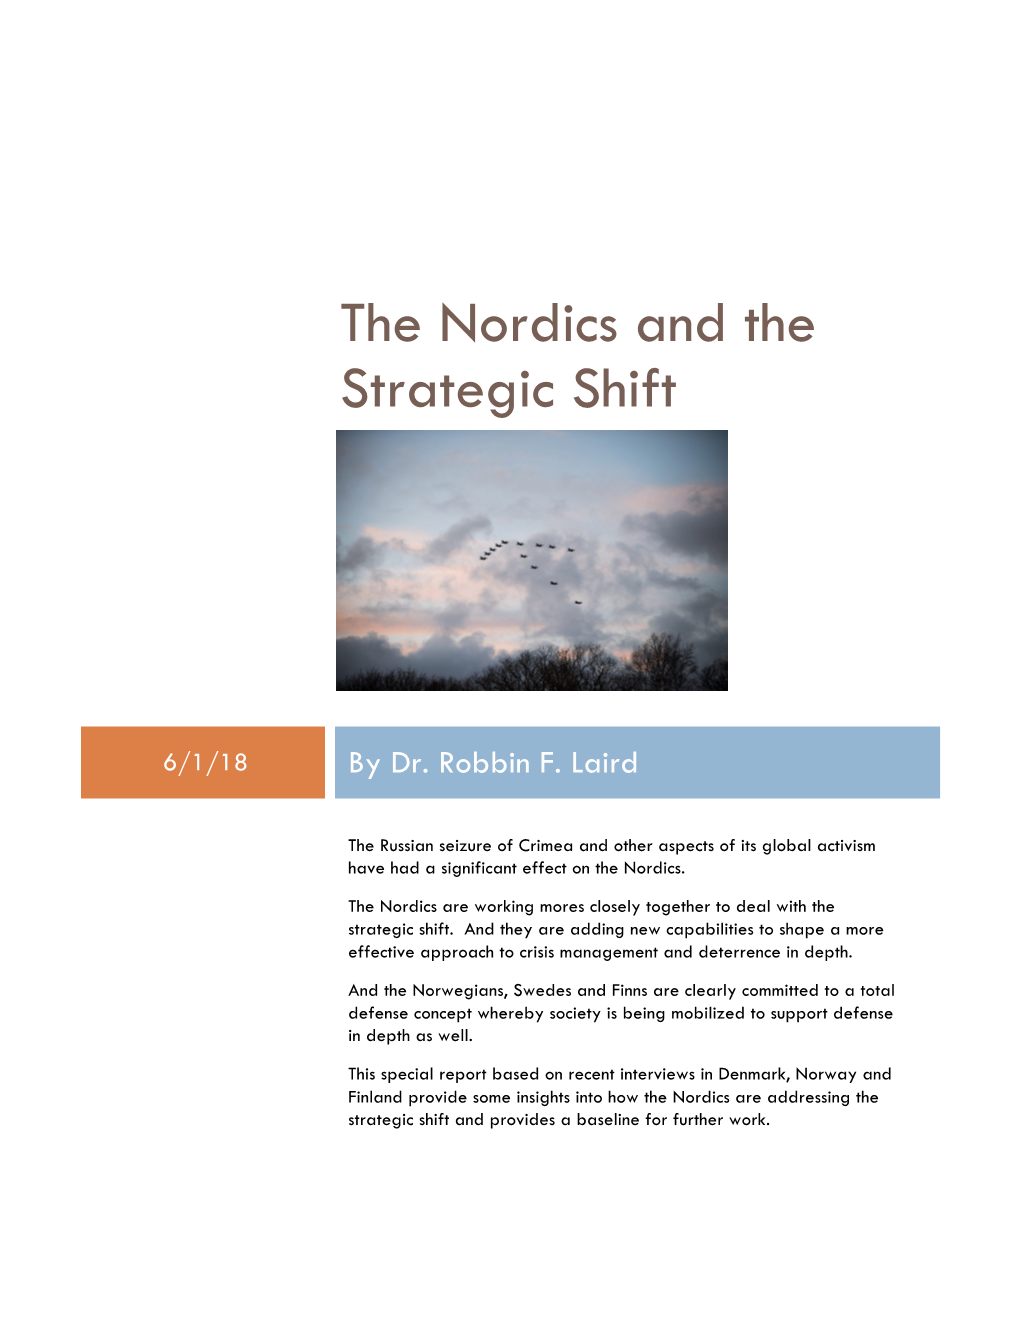 The Nordics and the Strategic Shift